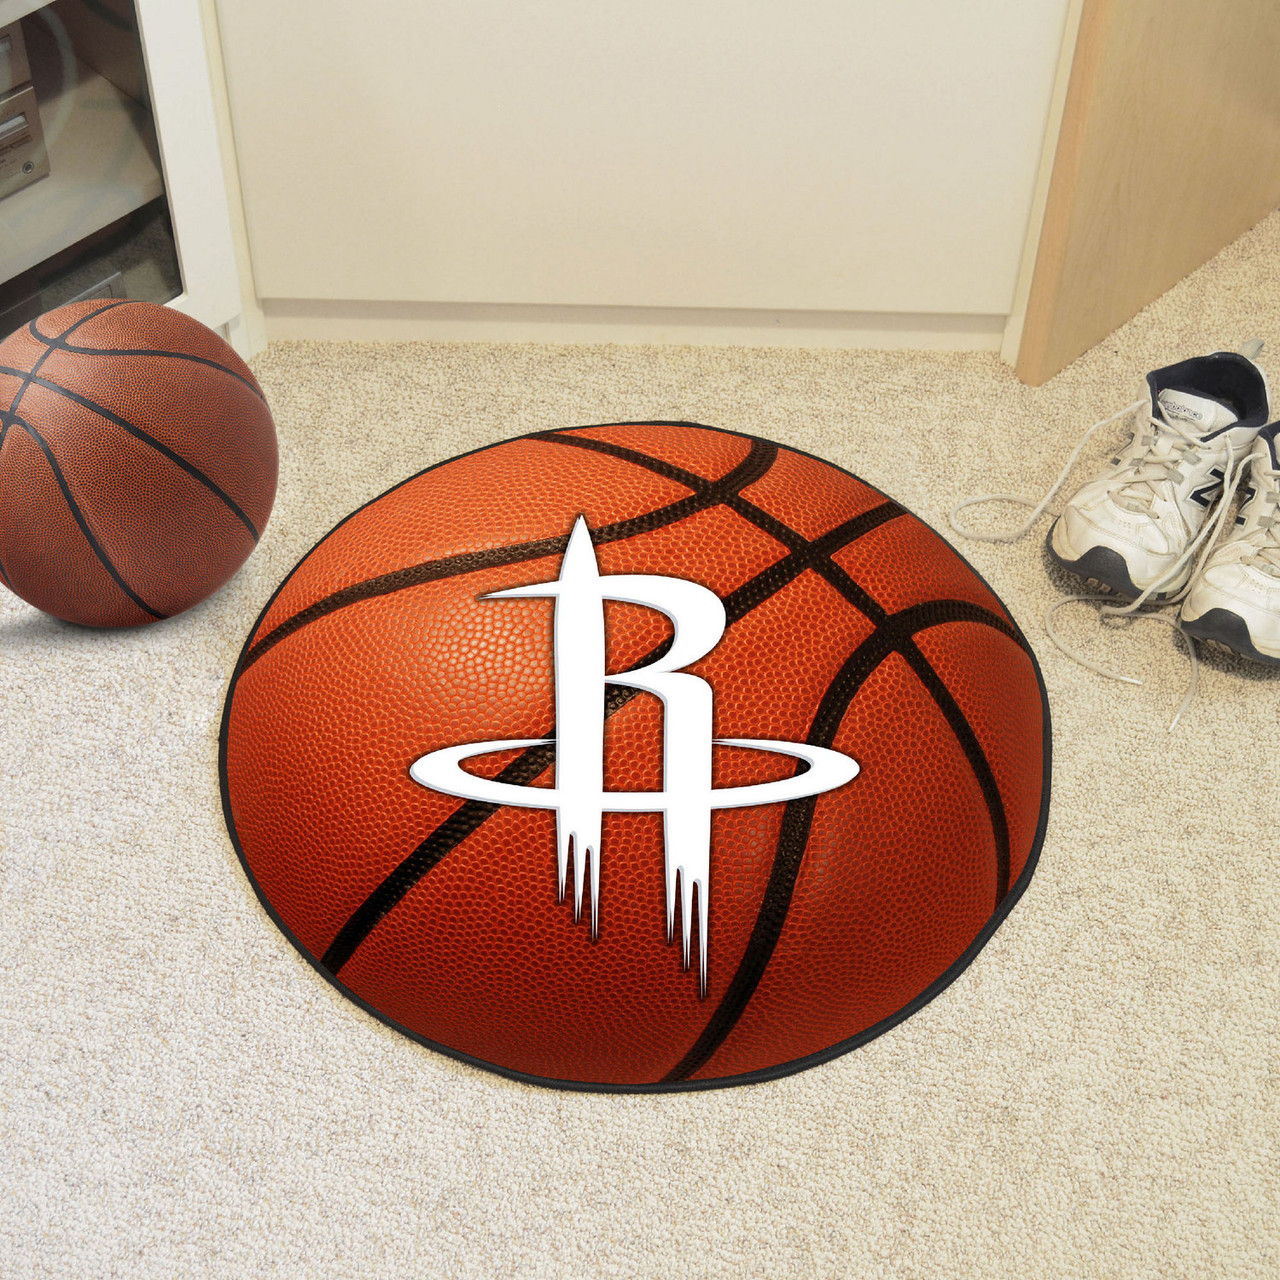 27" Houston Rockets Round Basketball Mat Floor Rug Area Rug NBA